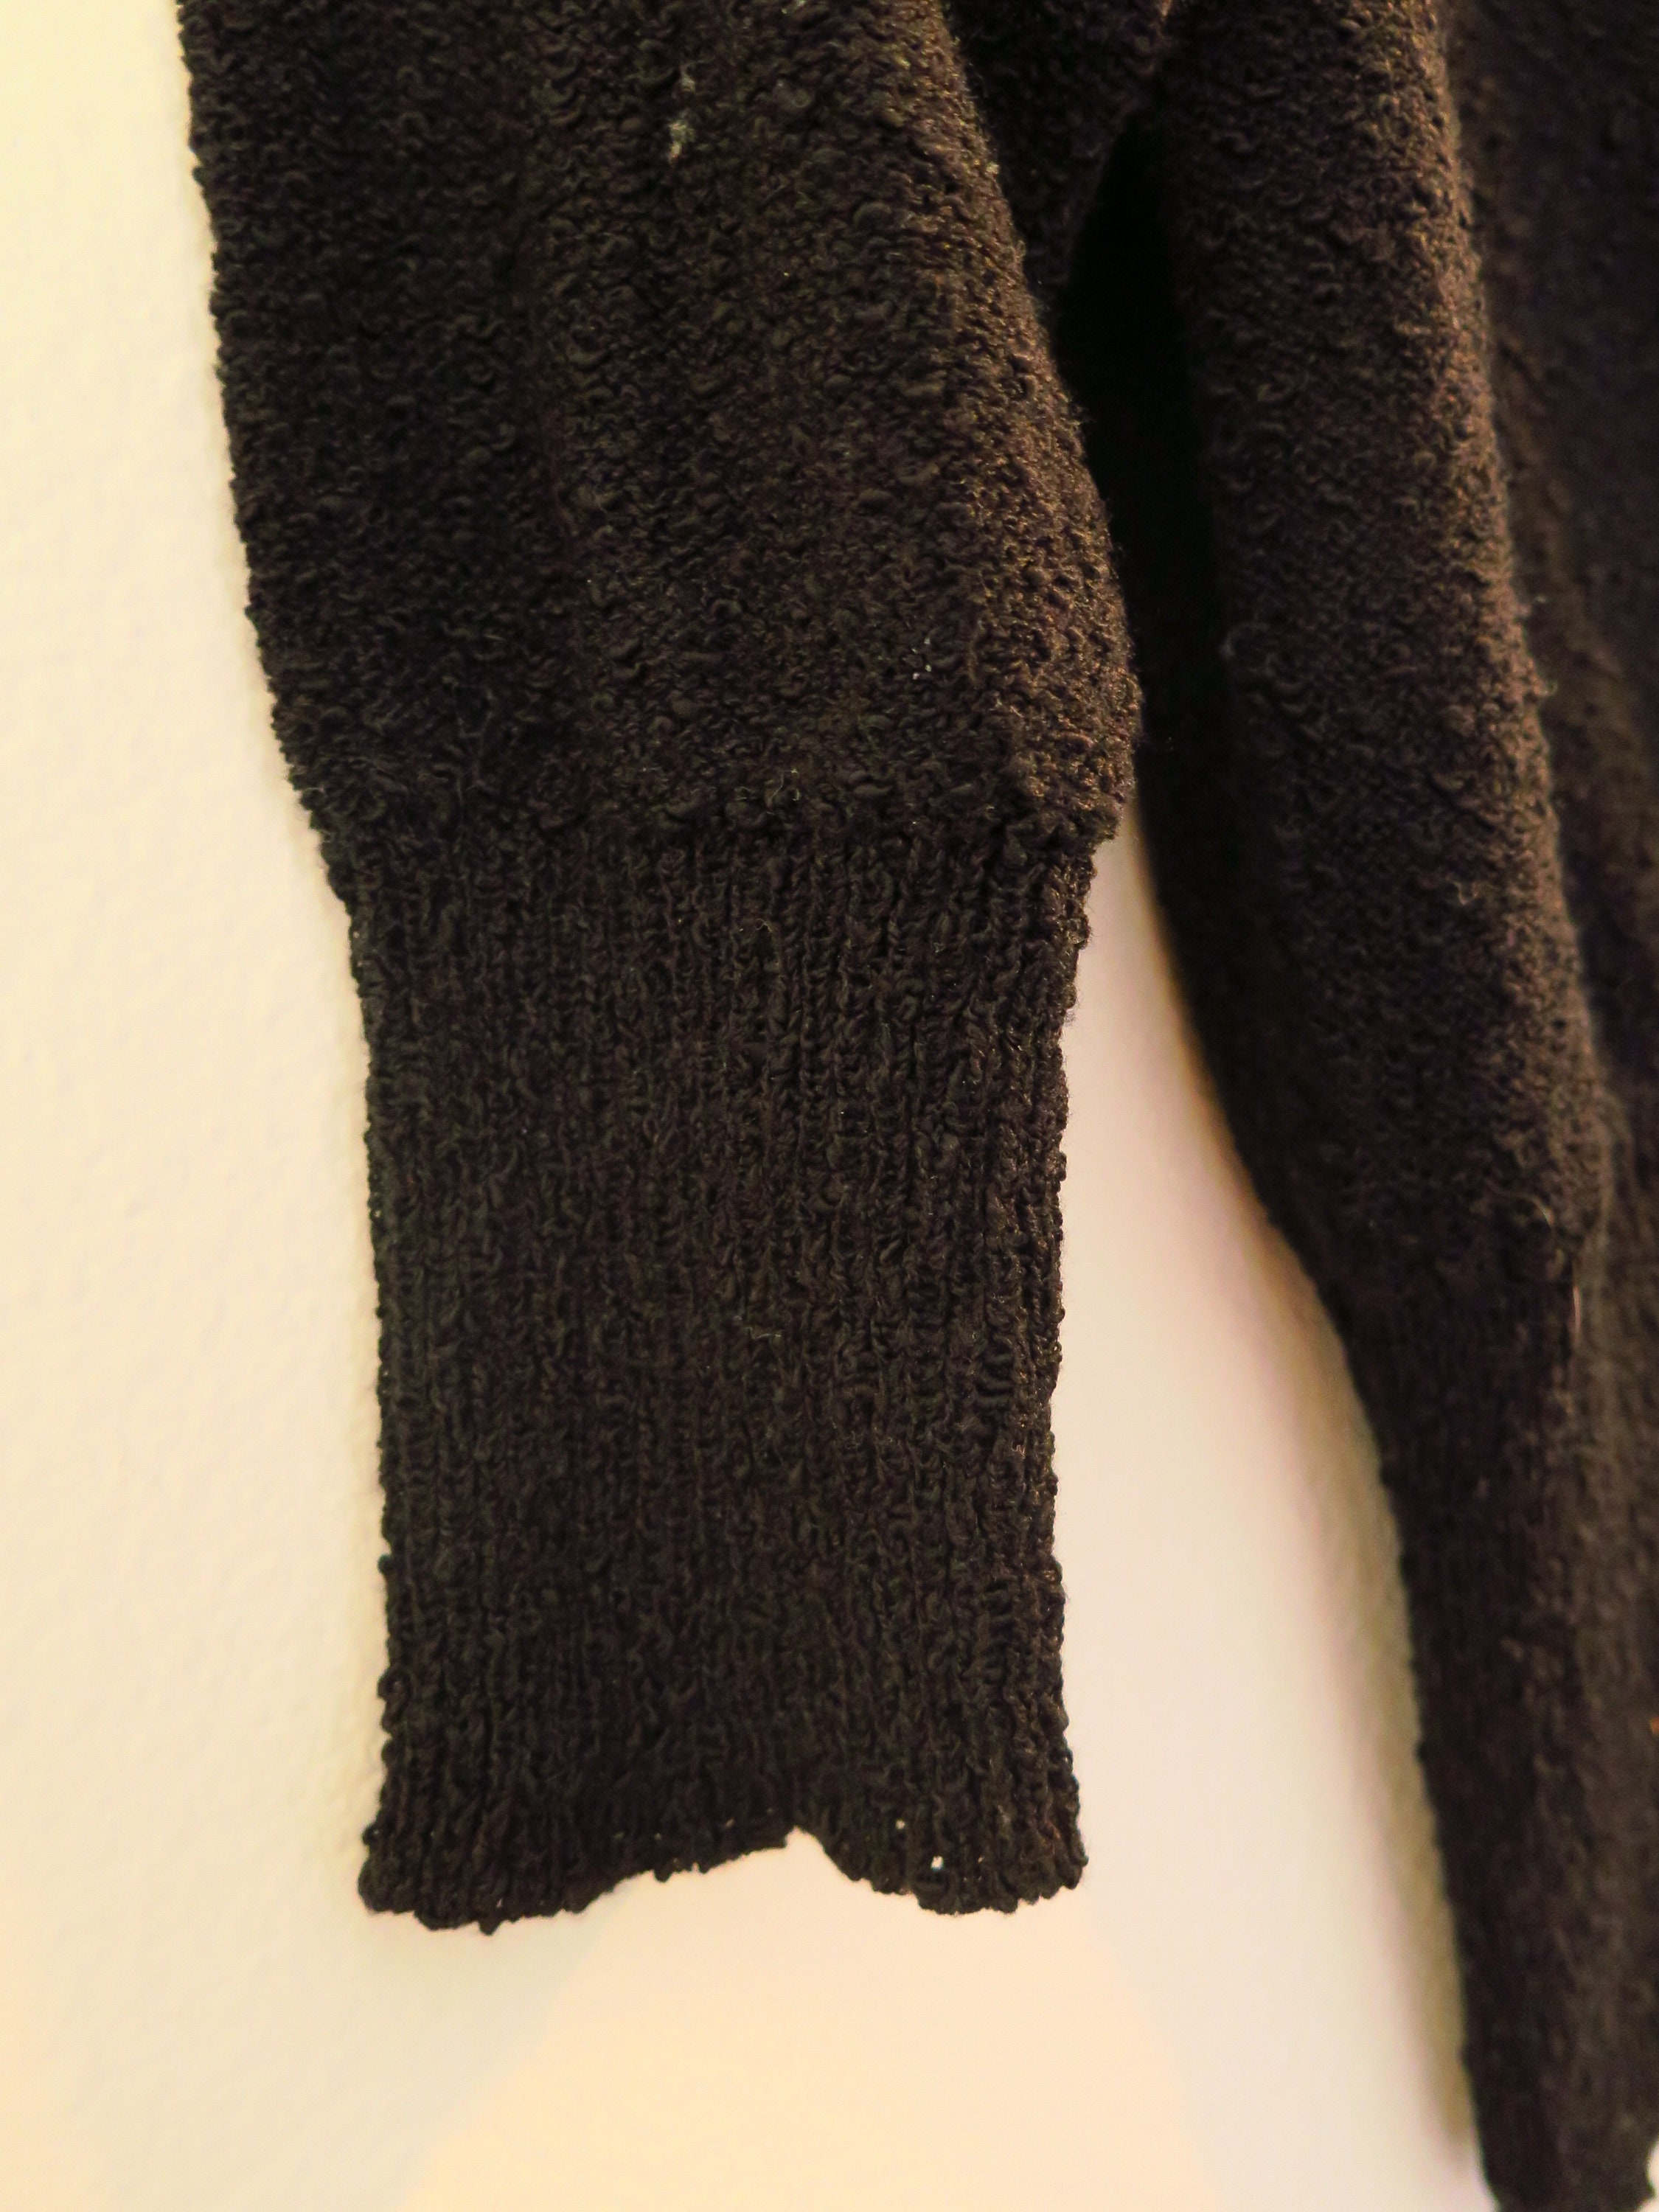 80s Era Vintage Beaded Black Sweater Top in Women's Size - Etsy